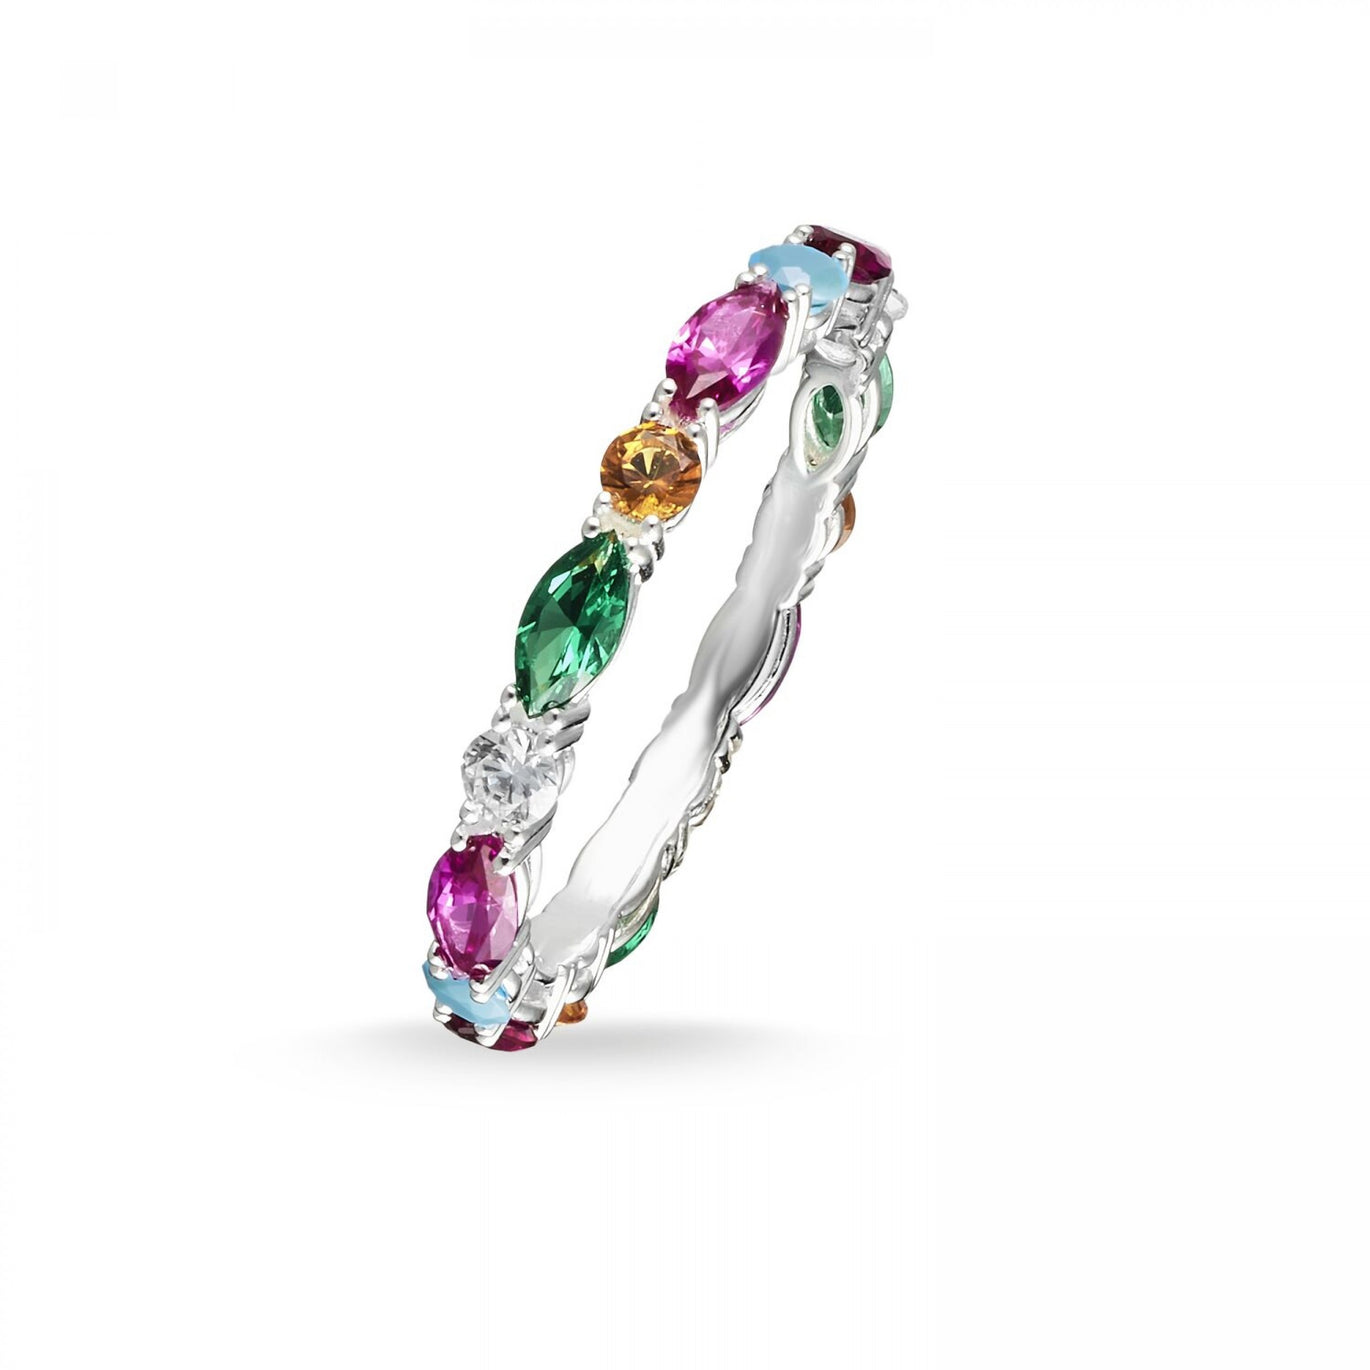 Thomas Sabo Colourful Stones Ring